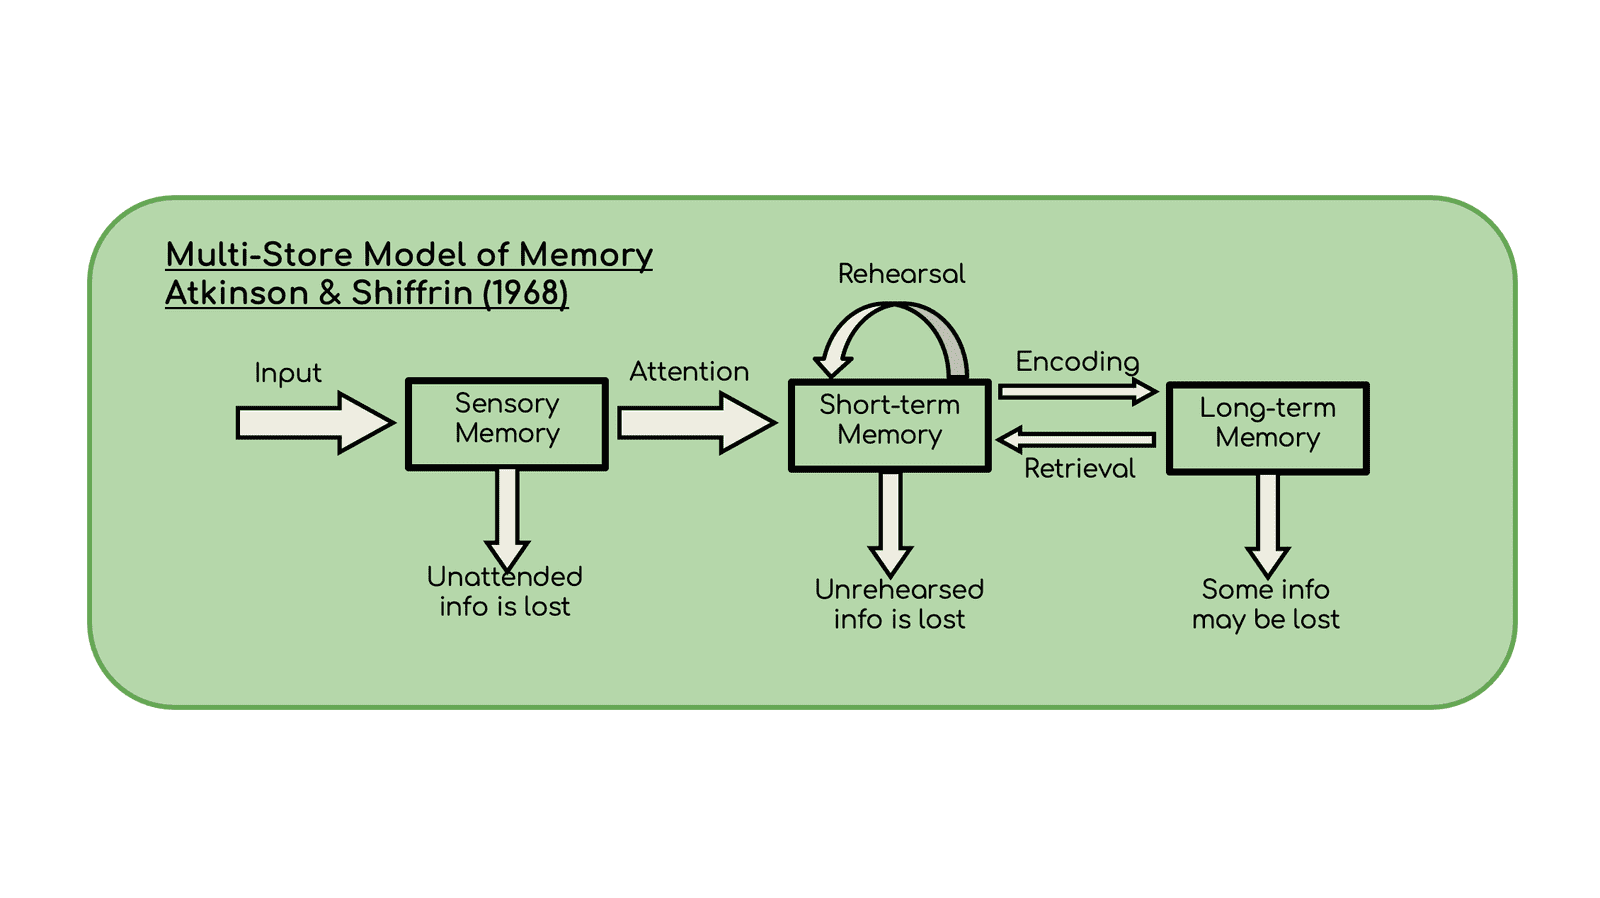 Multi-Store Memory Model diagram by Atkinson & Shiffrin.